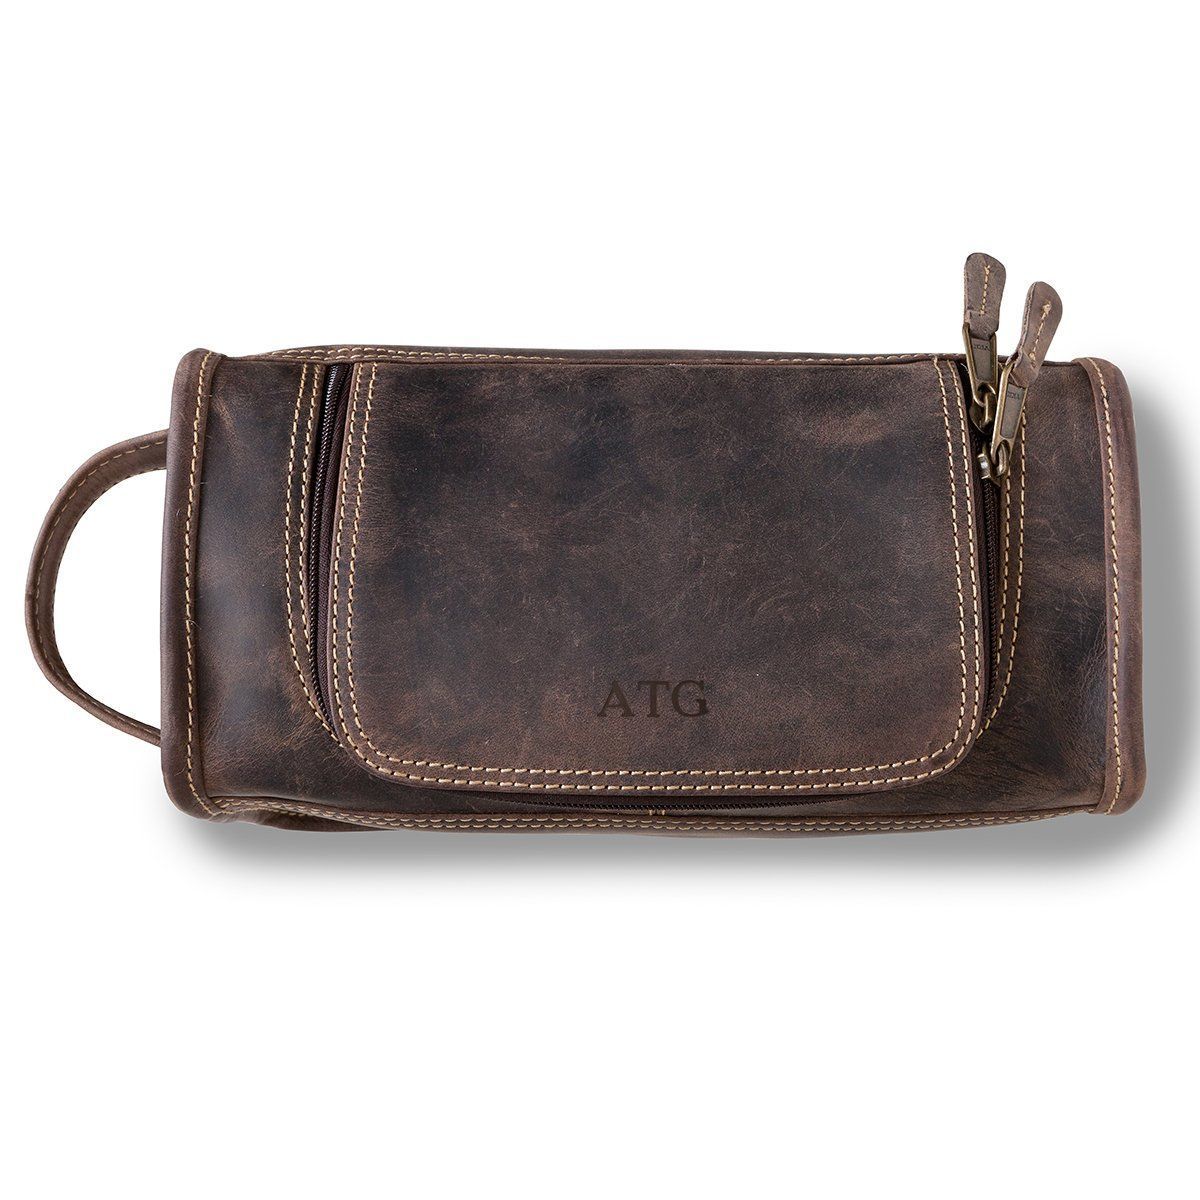 Personalized Borello Leather Distressed Brown Travel Dopp Kit